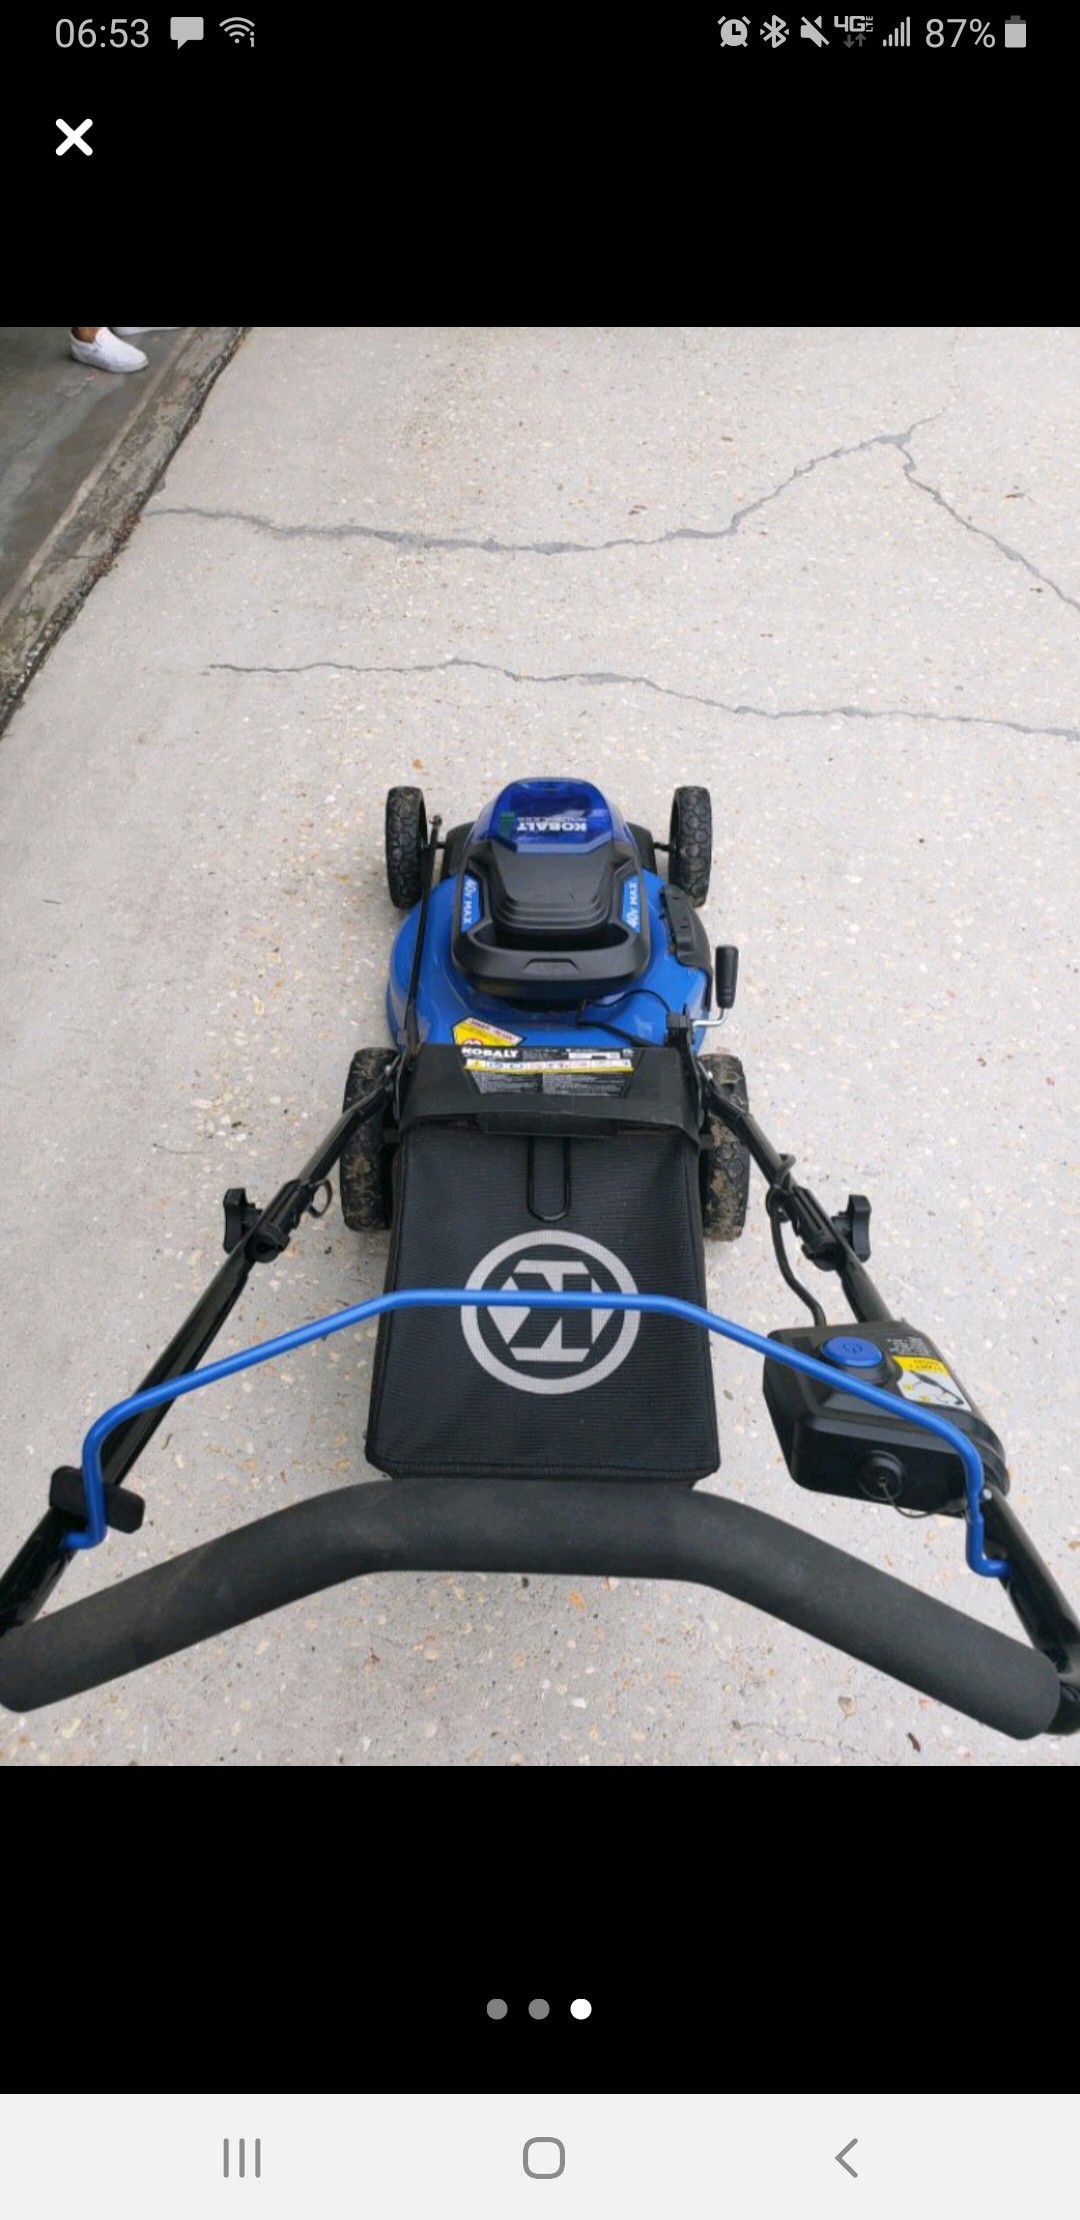 Kobalt electric lawn mower